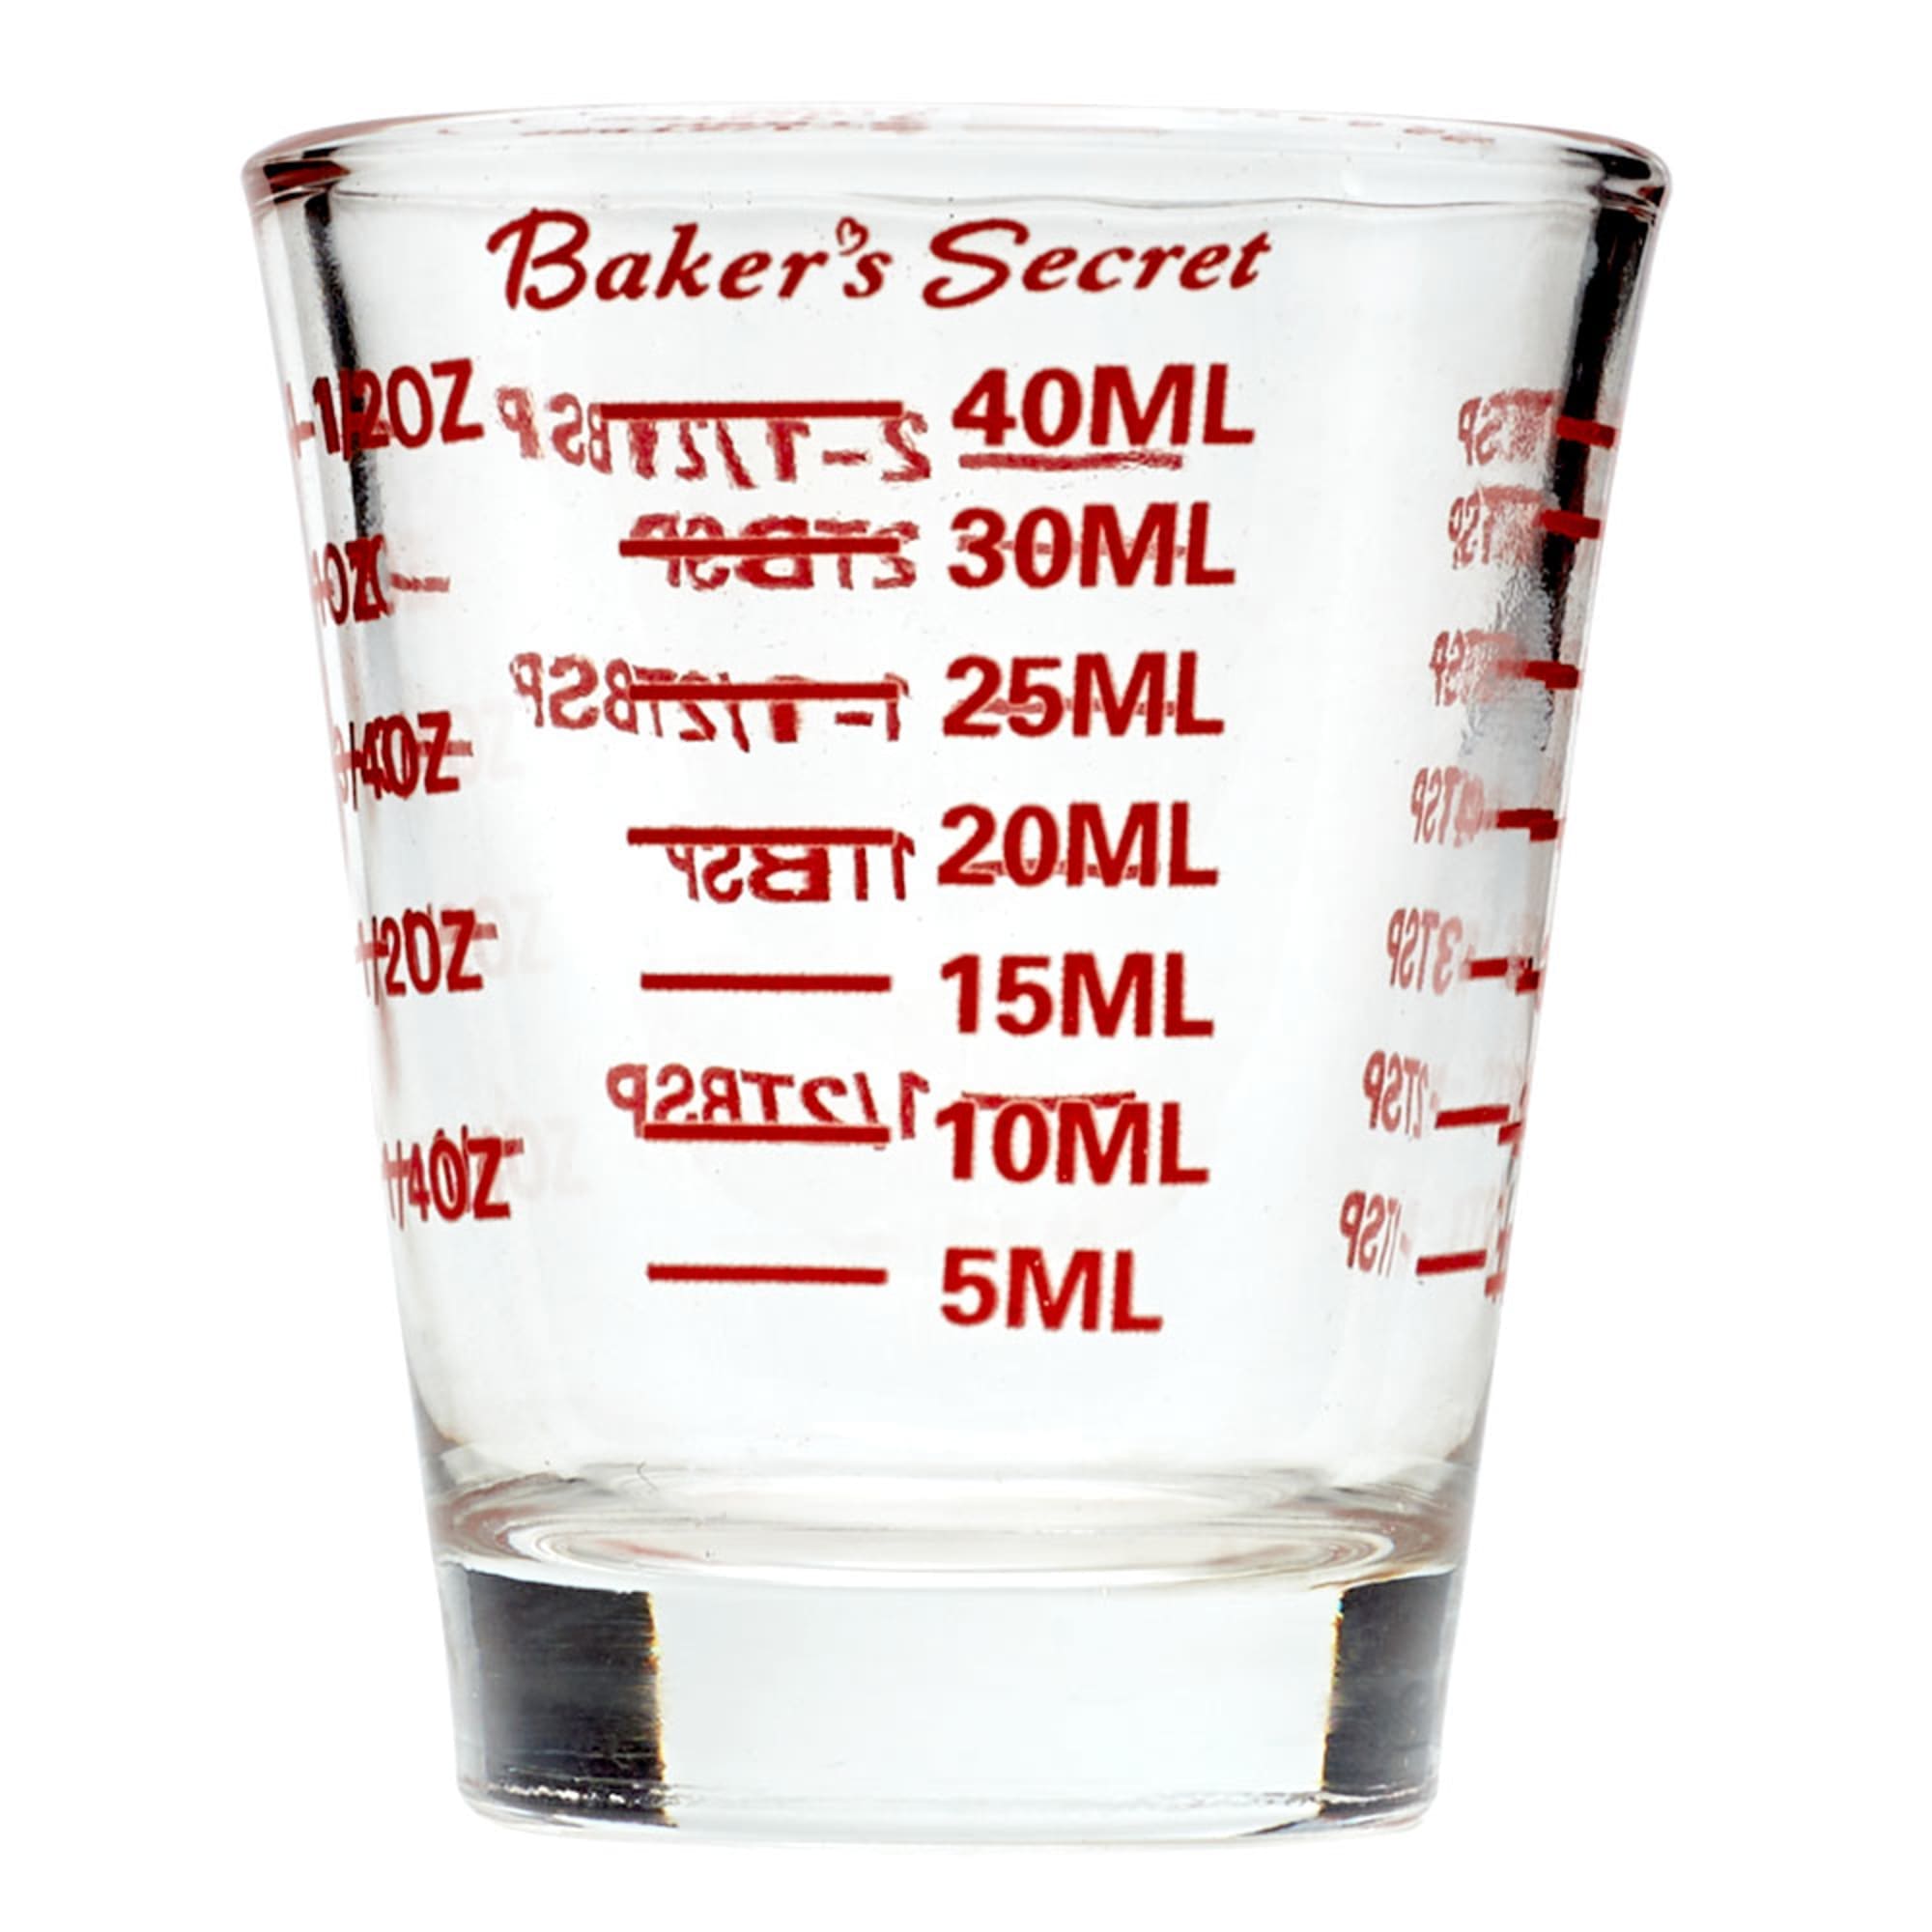 Baker’s Secret 1.5 oz Mini Measuring Cup $2.00 EACH, CASE PACK OF 48